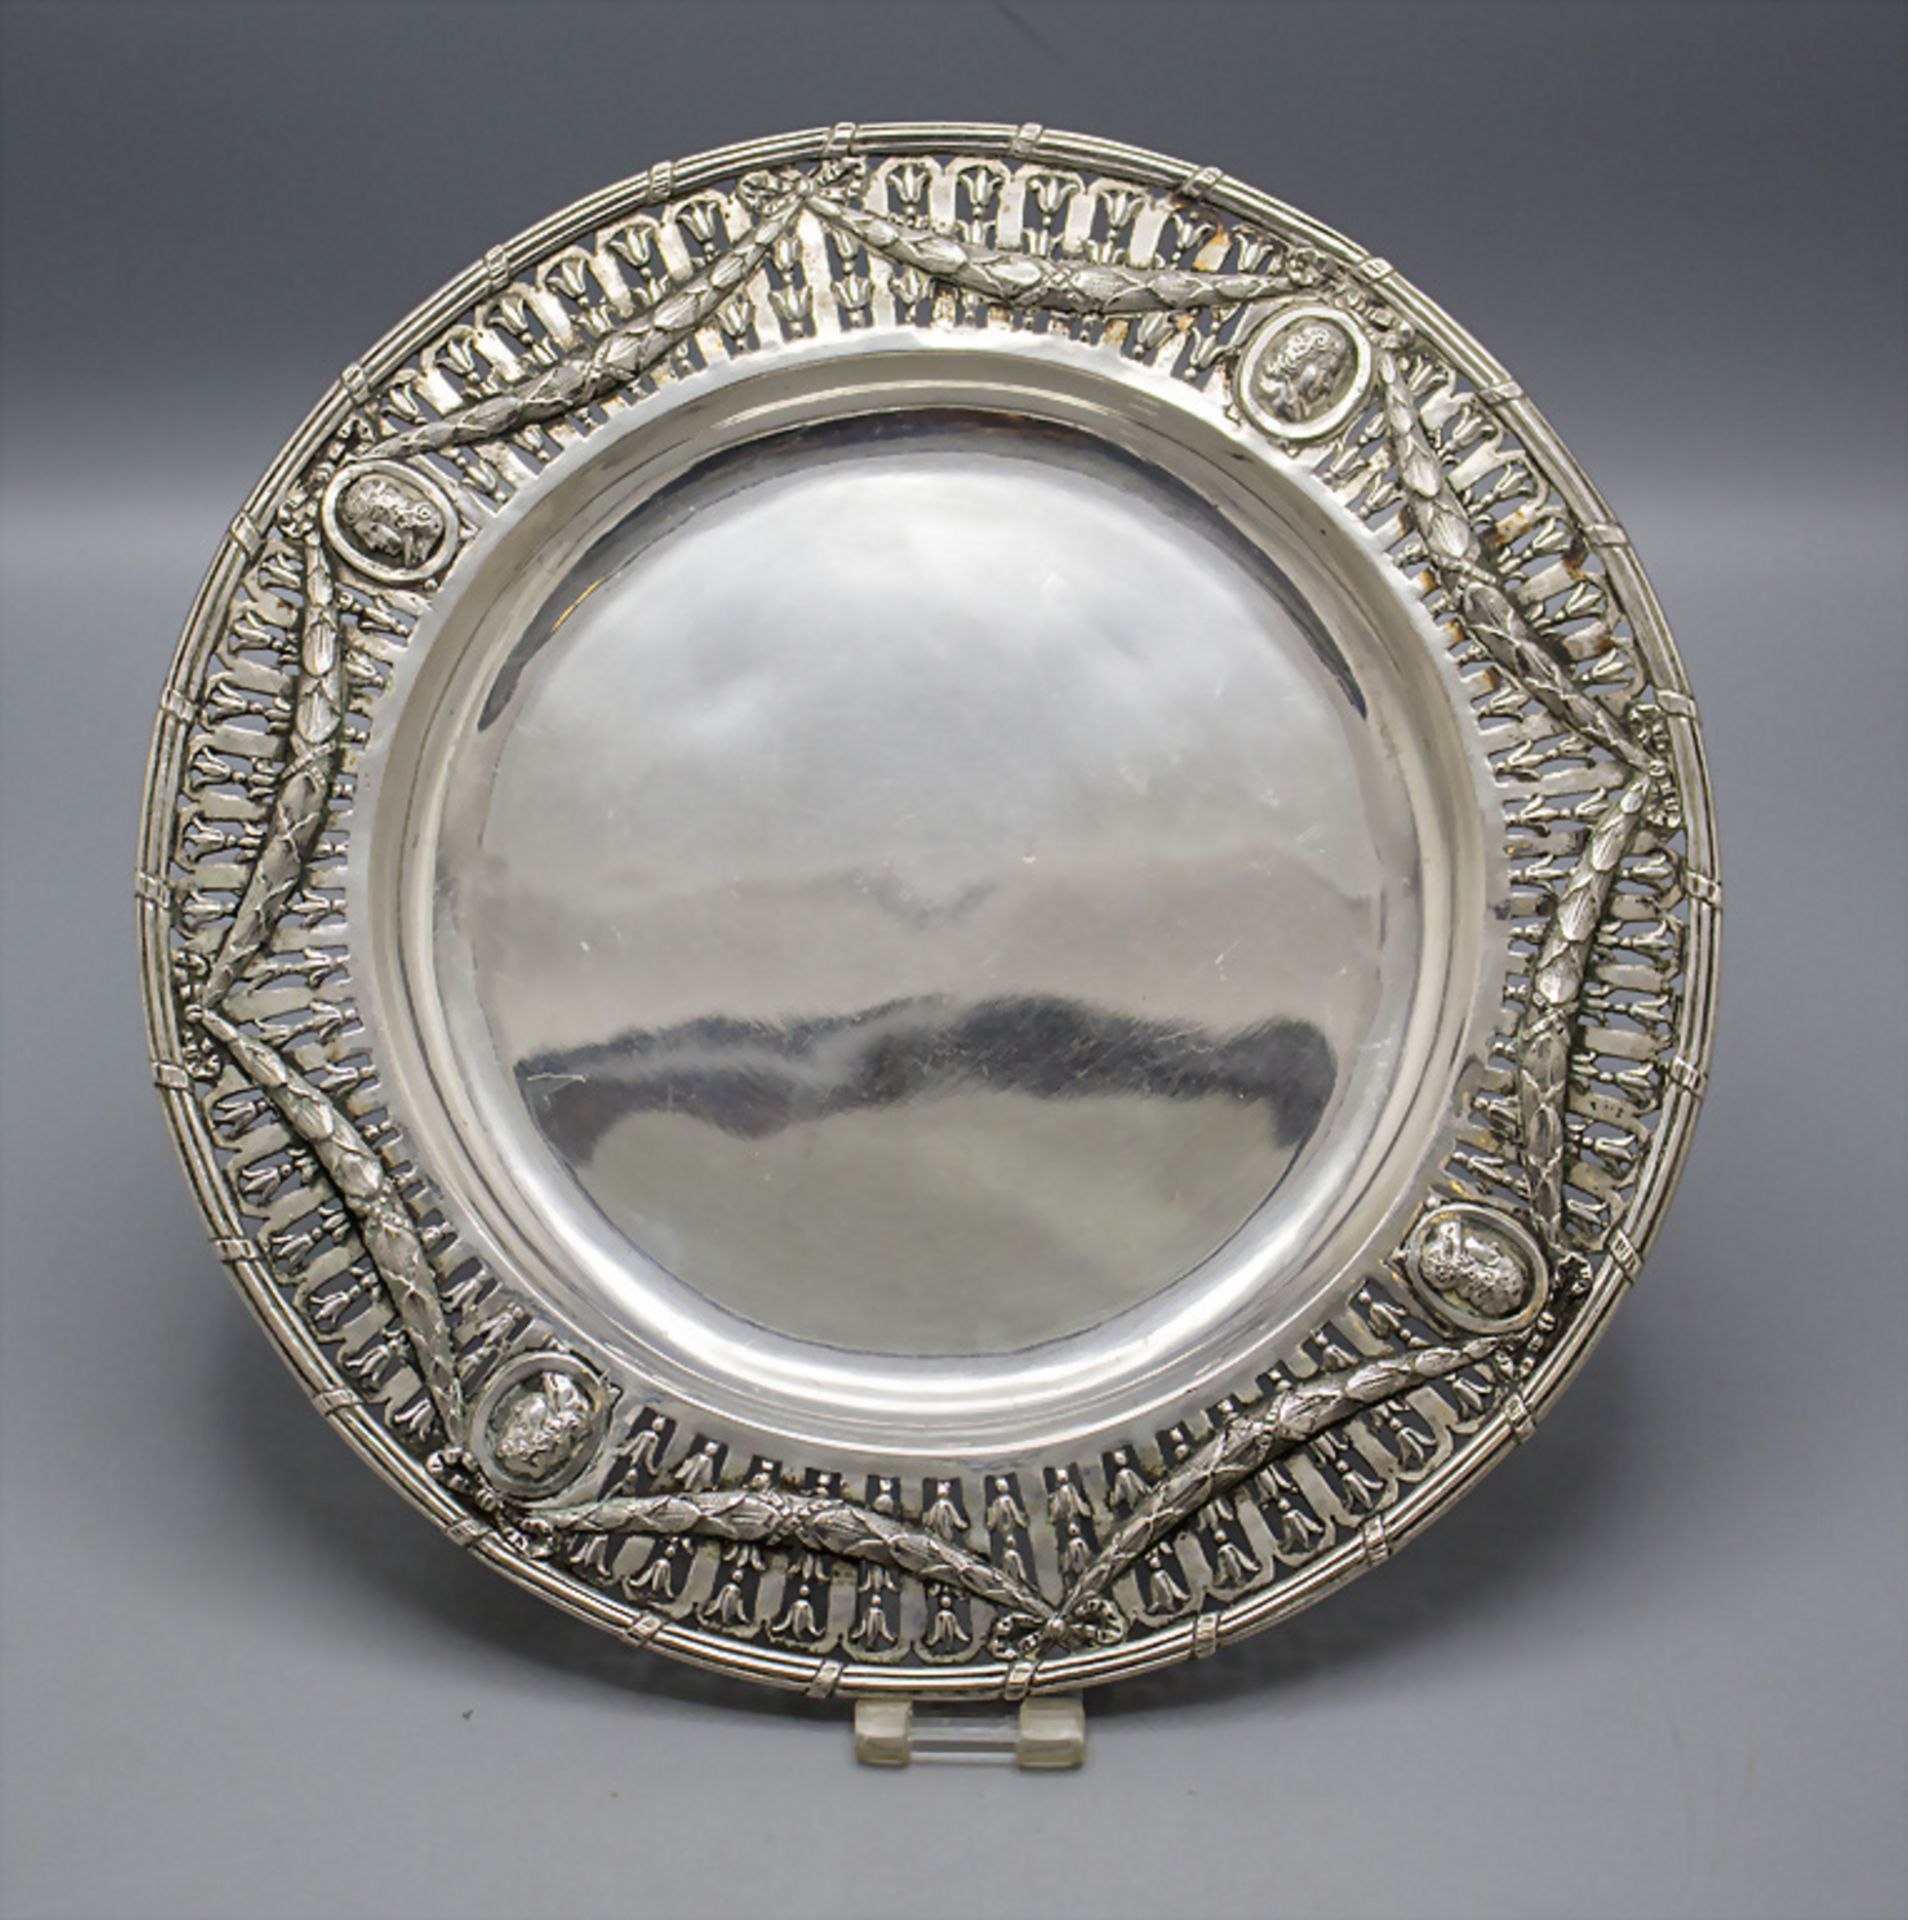 Zierteller / A decorative silver plate, wohl Simon Rosenau, Hanau, um 1900